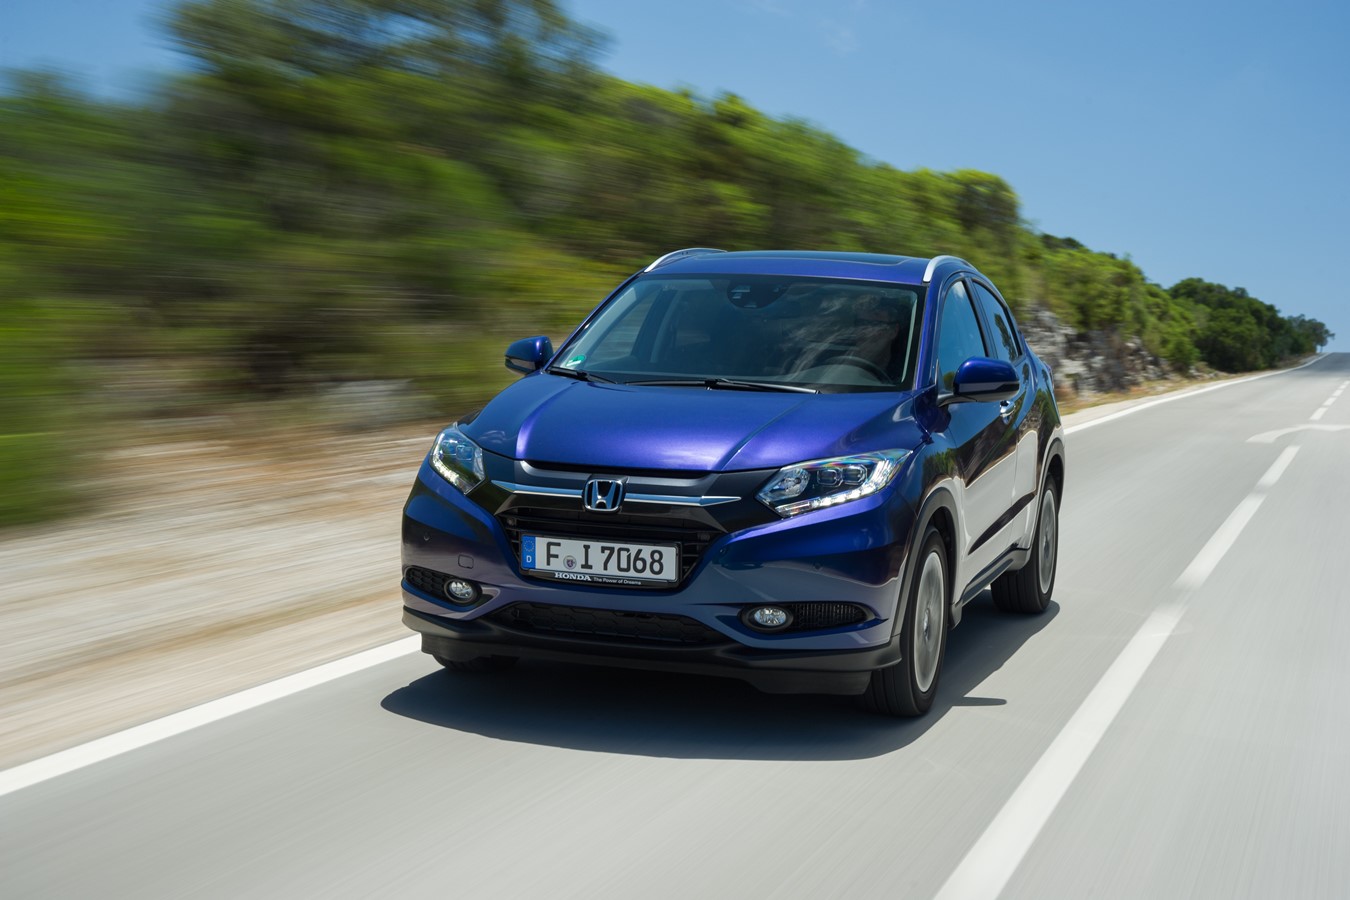 Honda's international sales success story lands in Europe